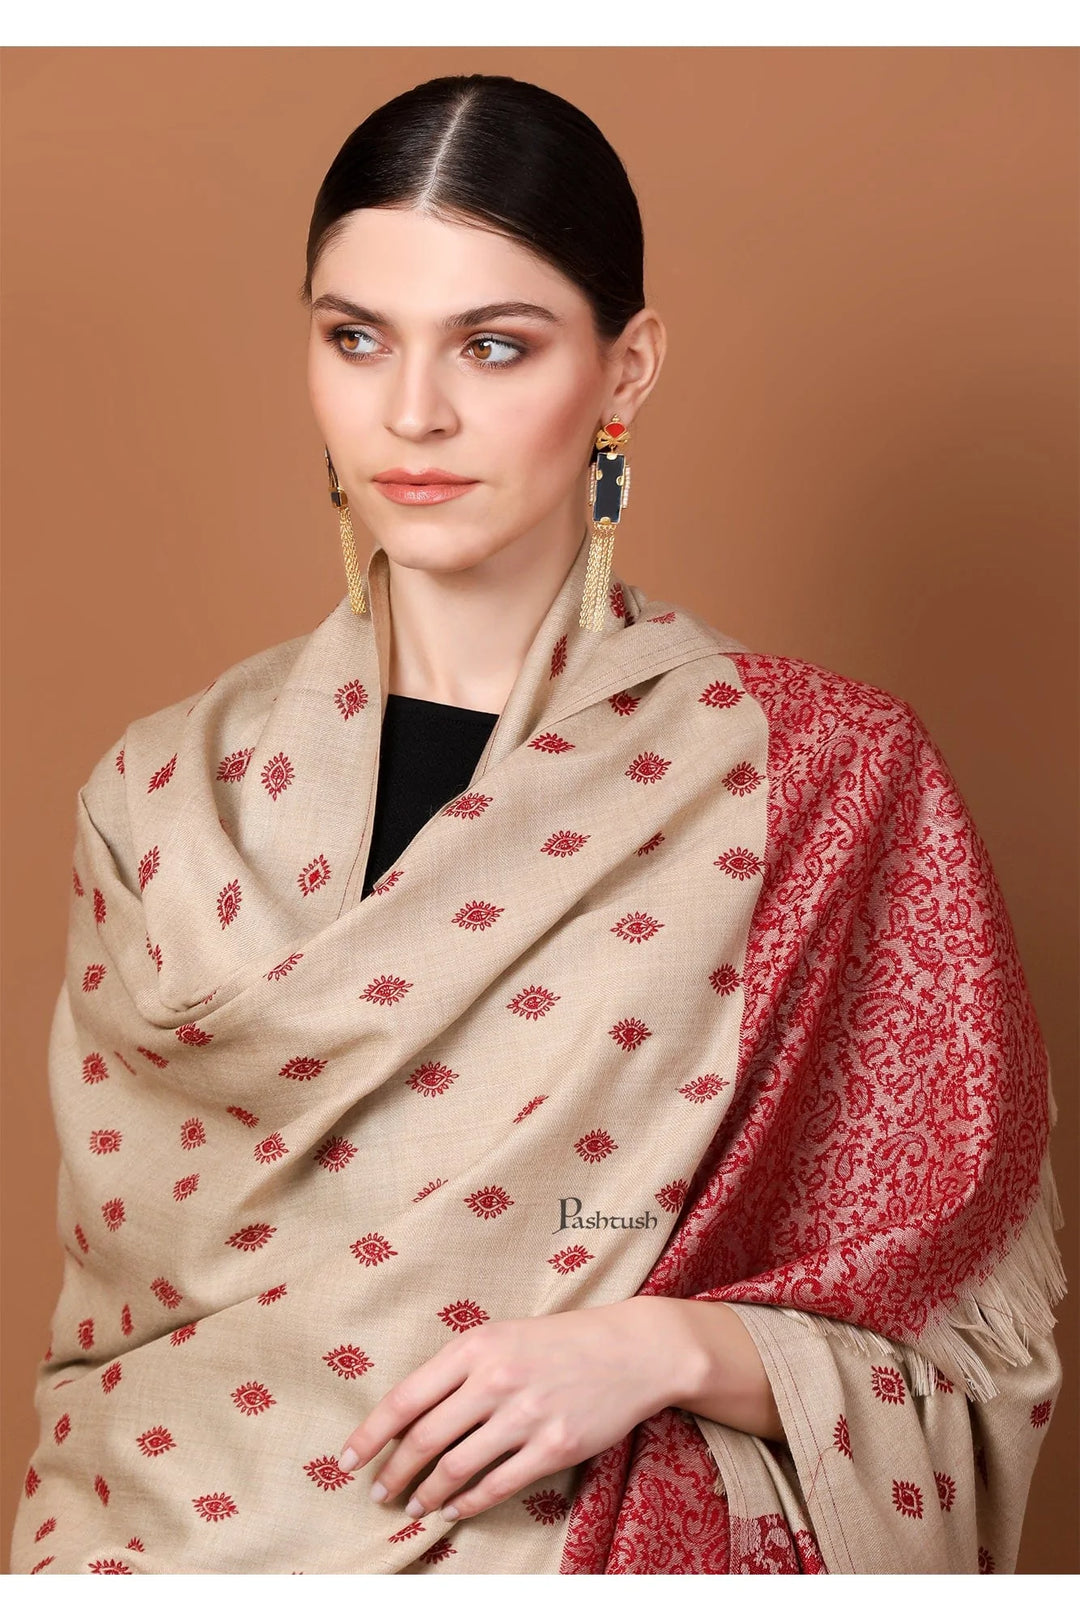 Pashtush India Womens Shawls Pashtush Womens Embroidery Shawl, Light Weight And Warm, Beige